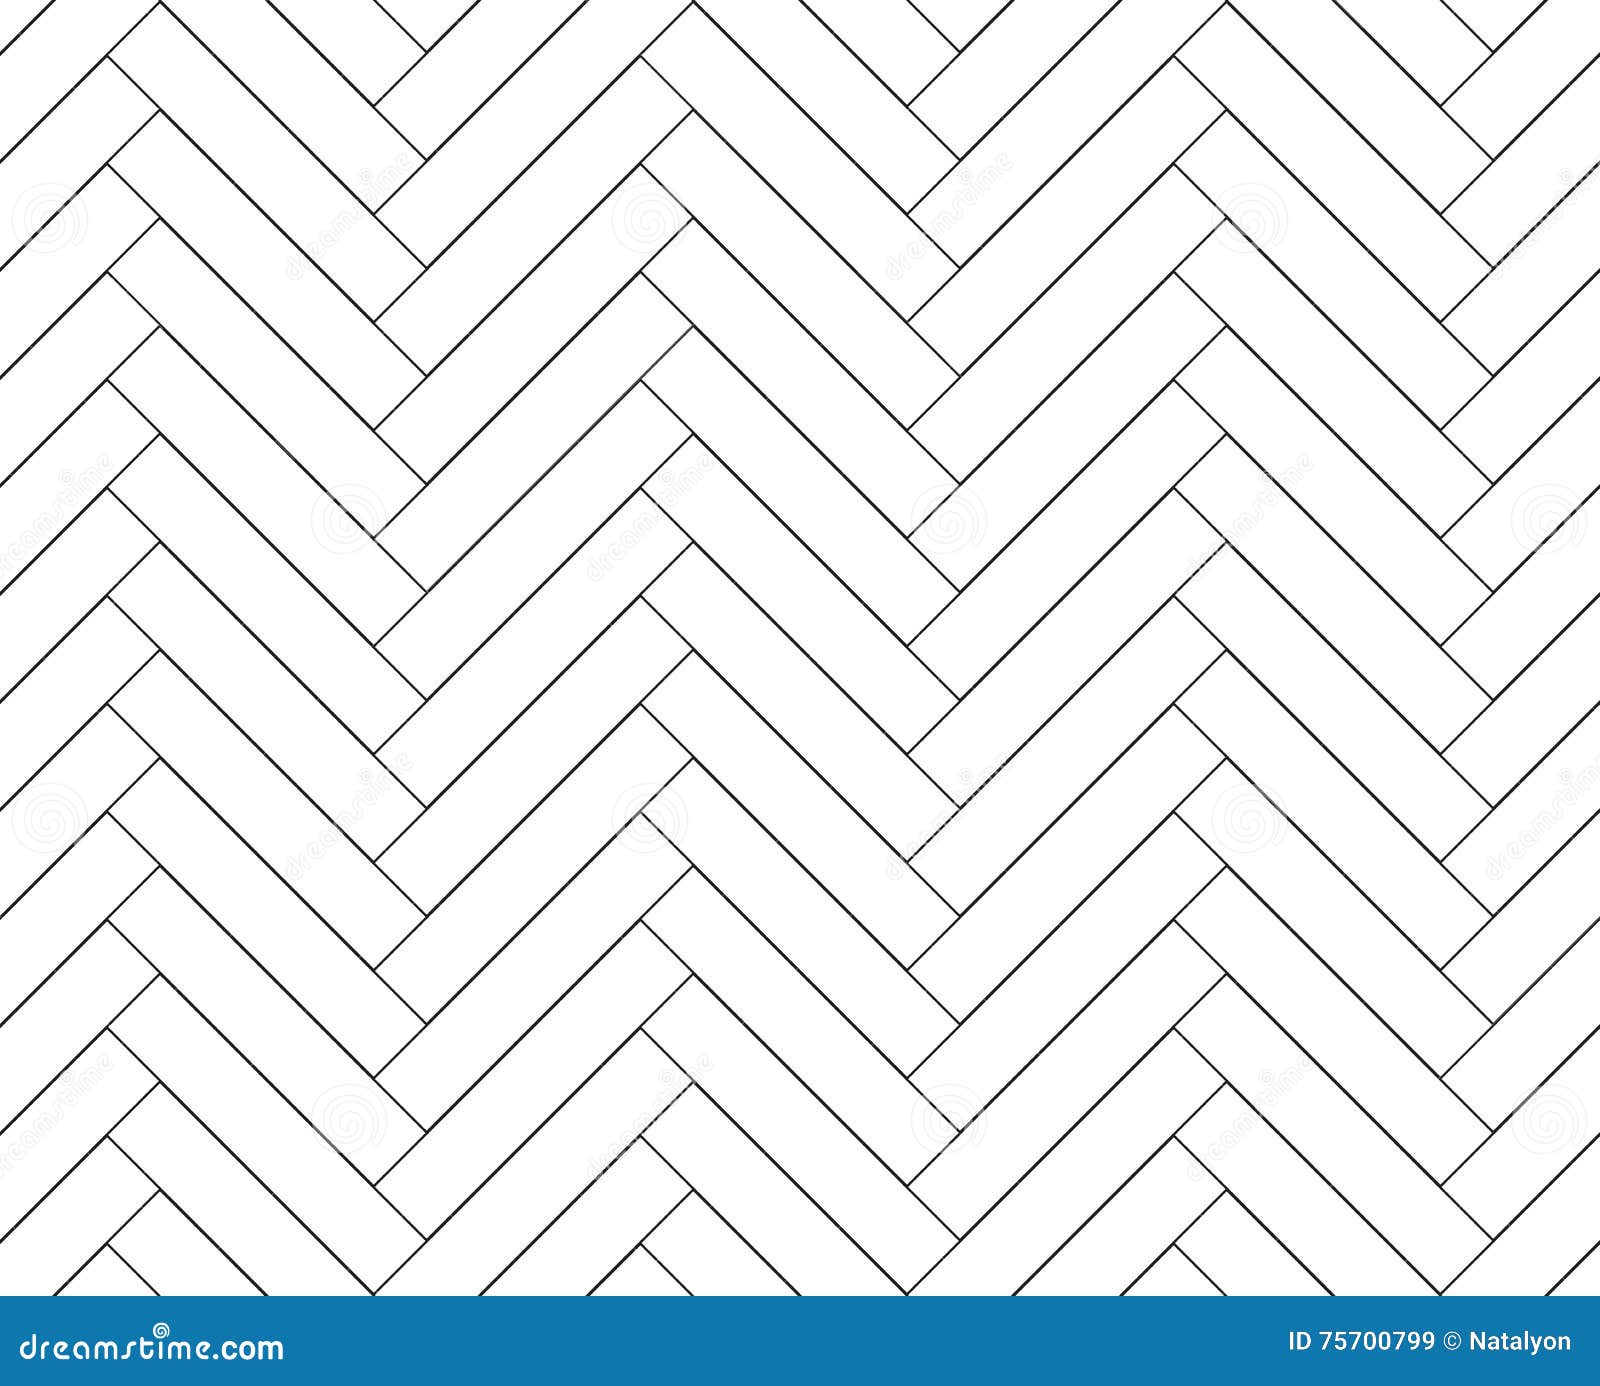 black and white simple wooden floor herringbone parquet seamless pattern, 